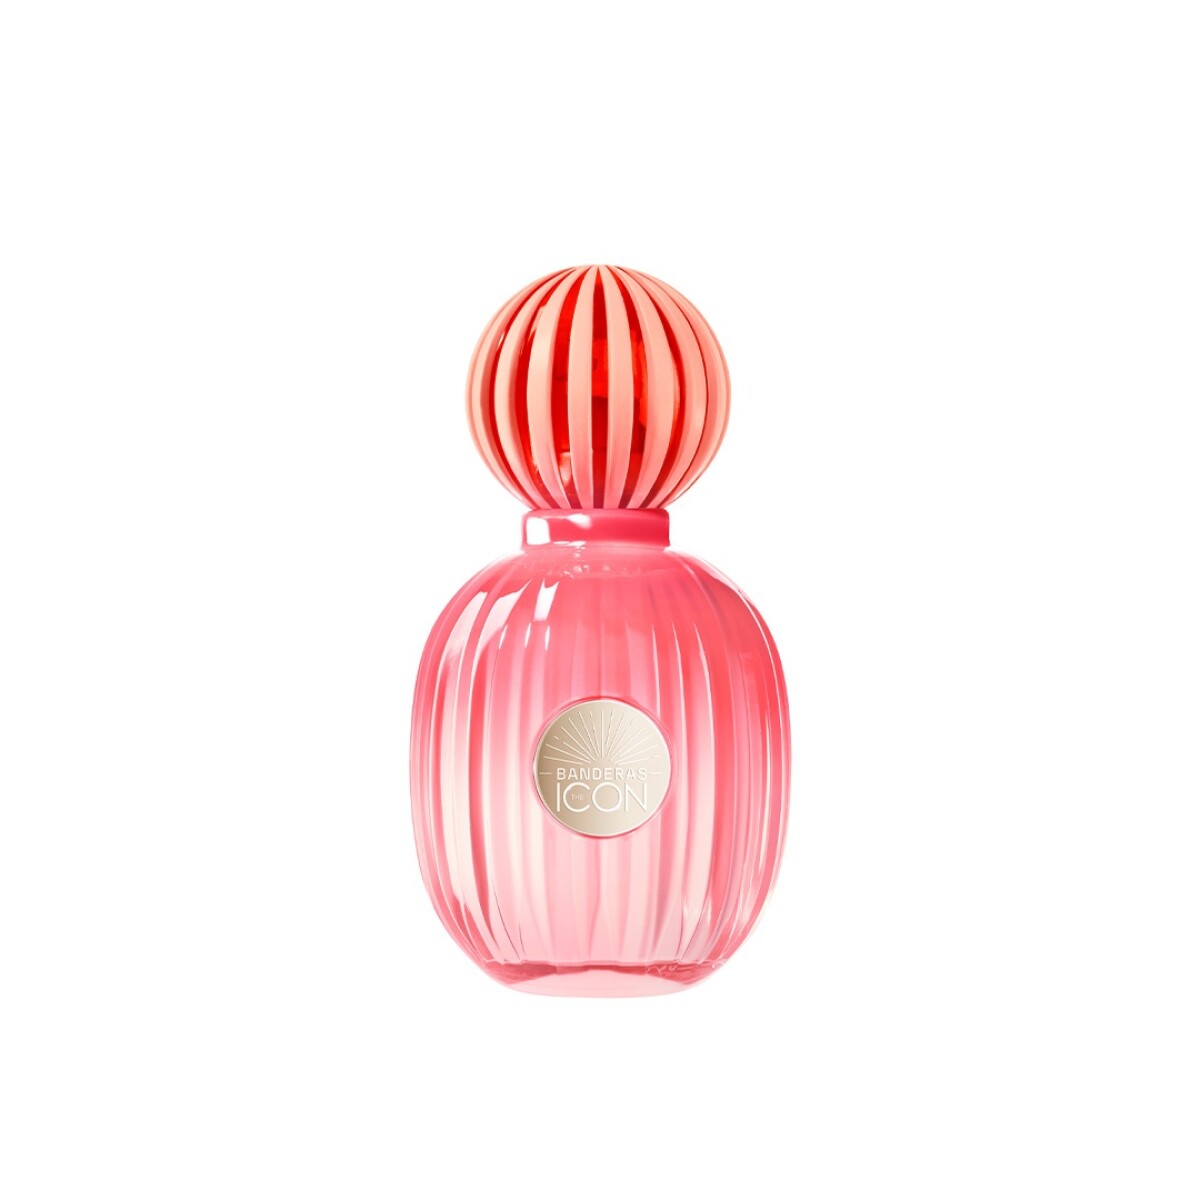 Perfume Antonio Banderas The Icon Splendid Edp 50ml 